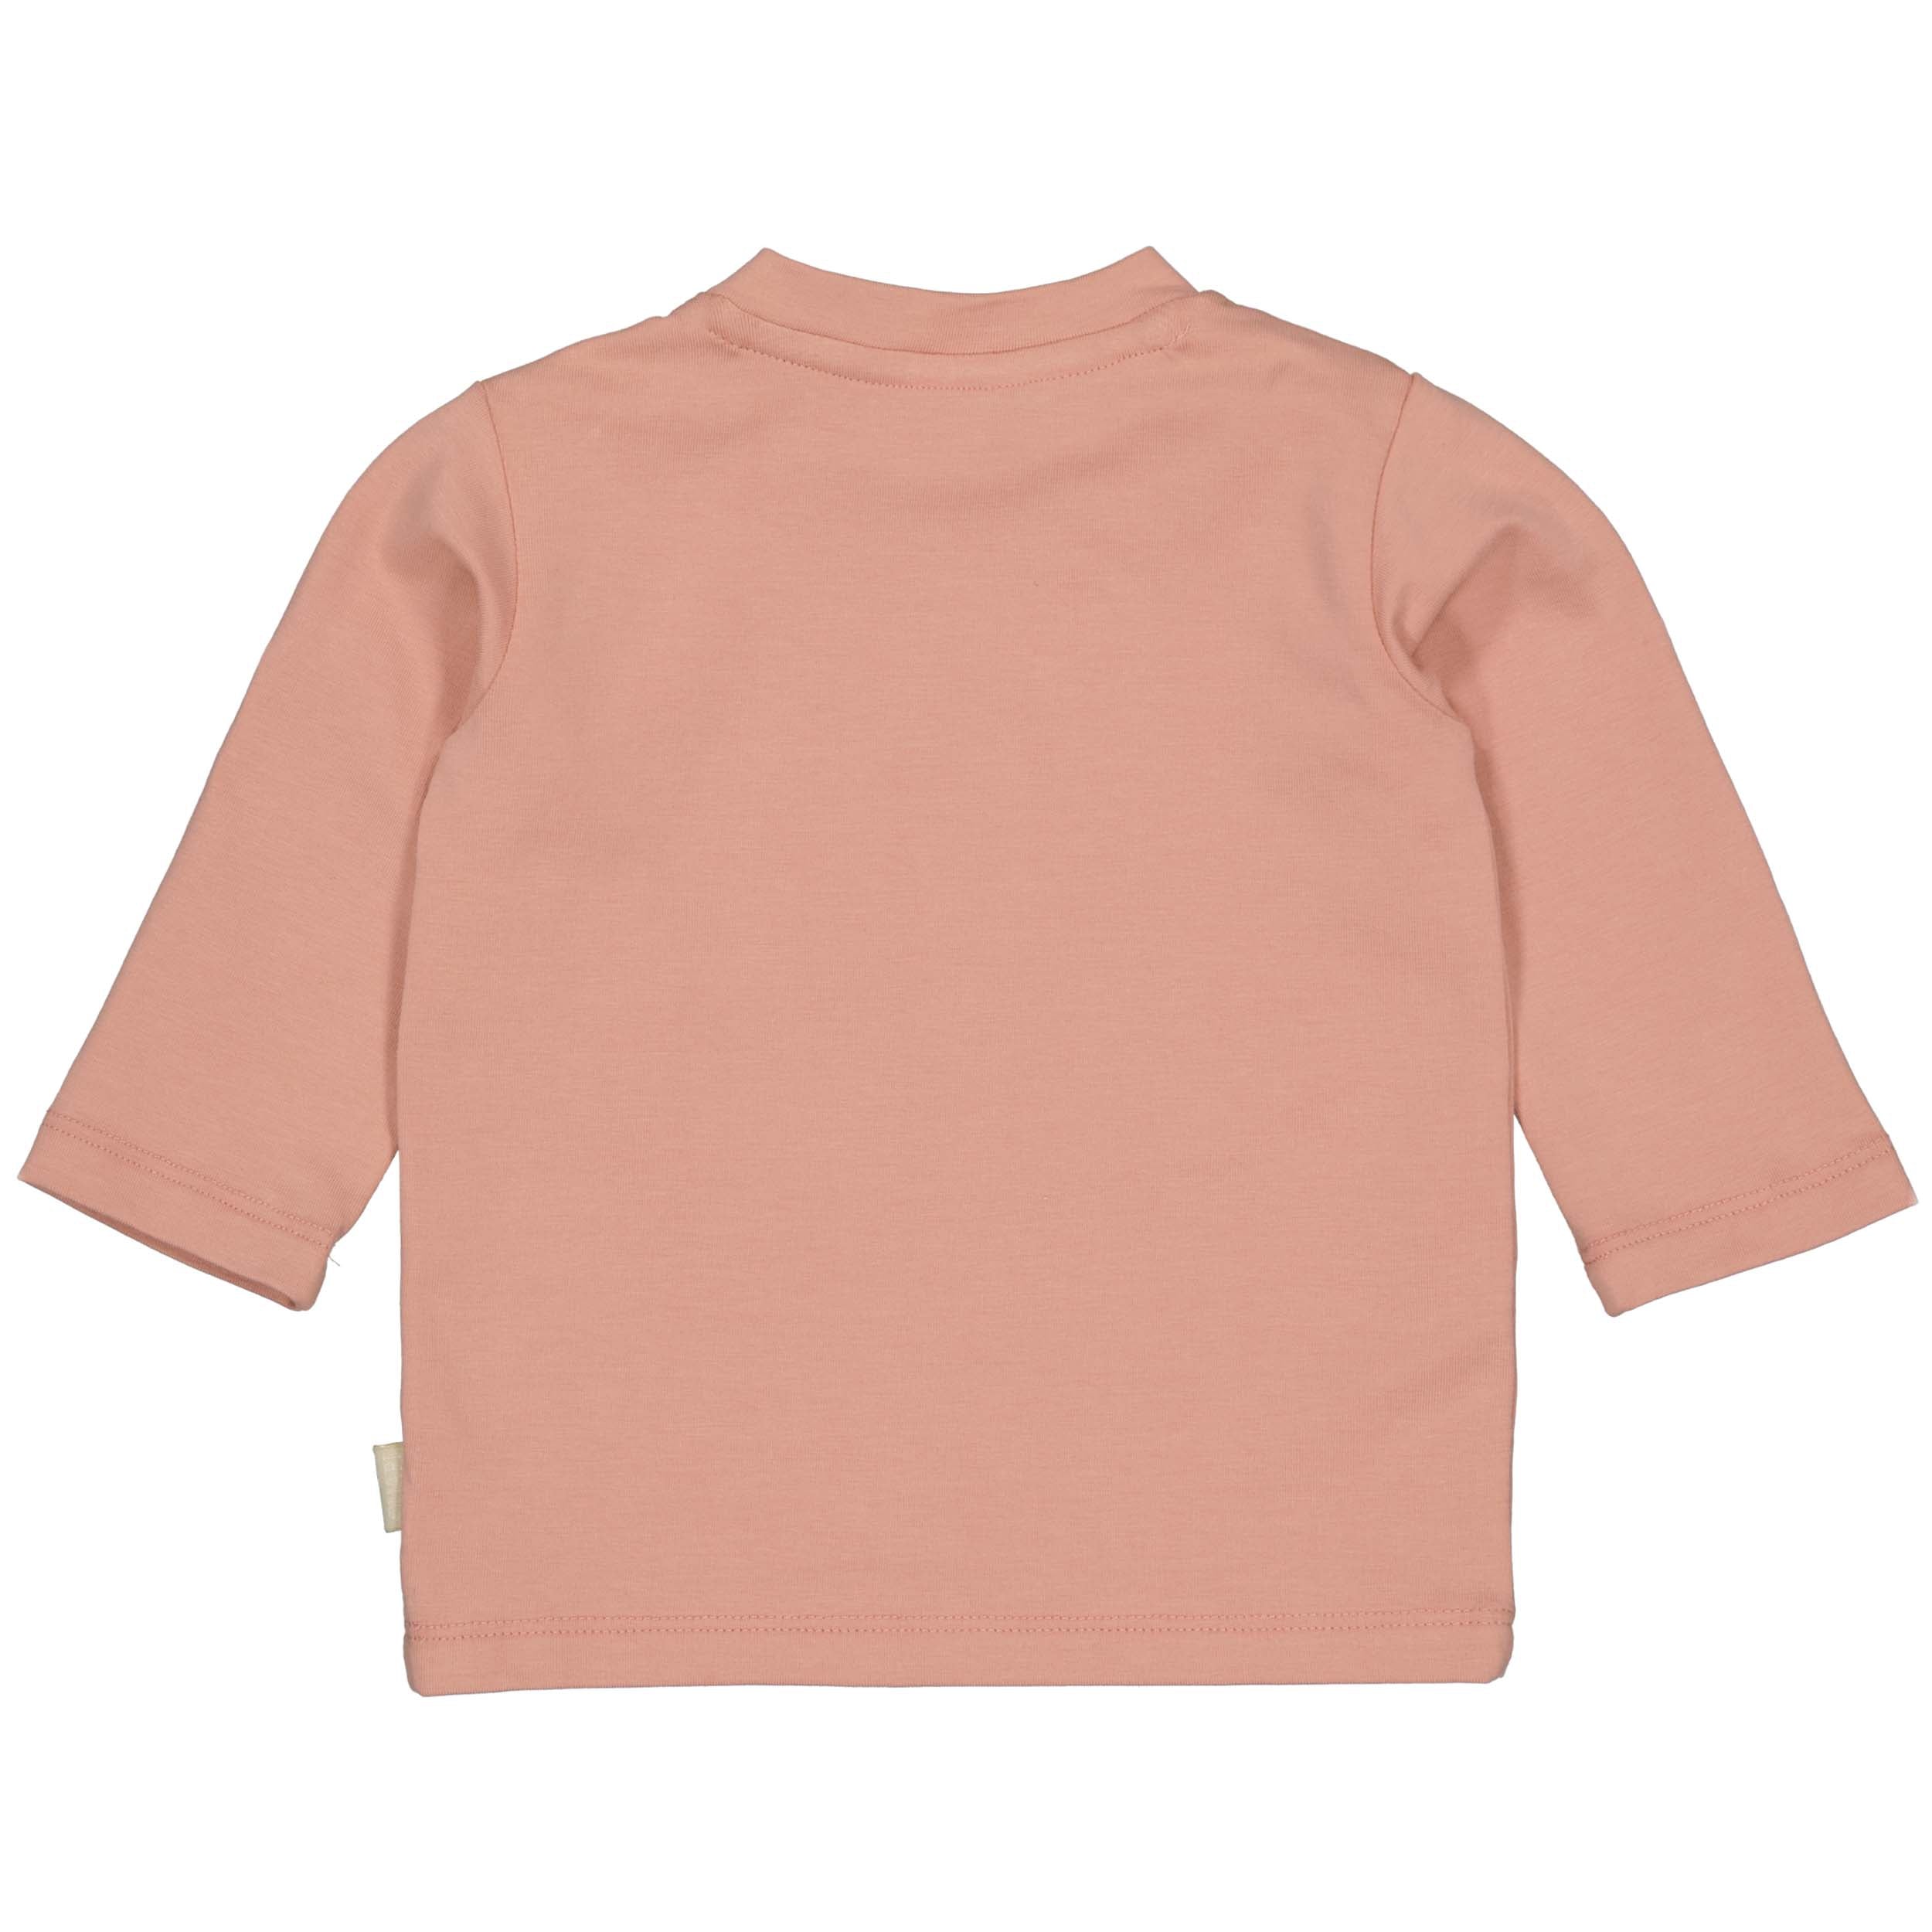 Meisjes Longsleeve DEA van Quapi Newborn in de kleur Pink Blush in maat 68.